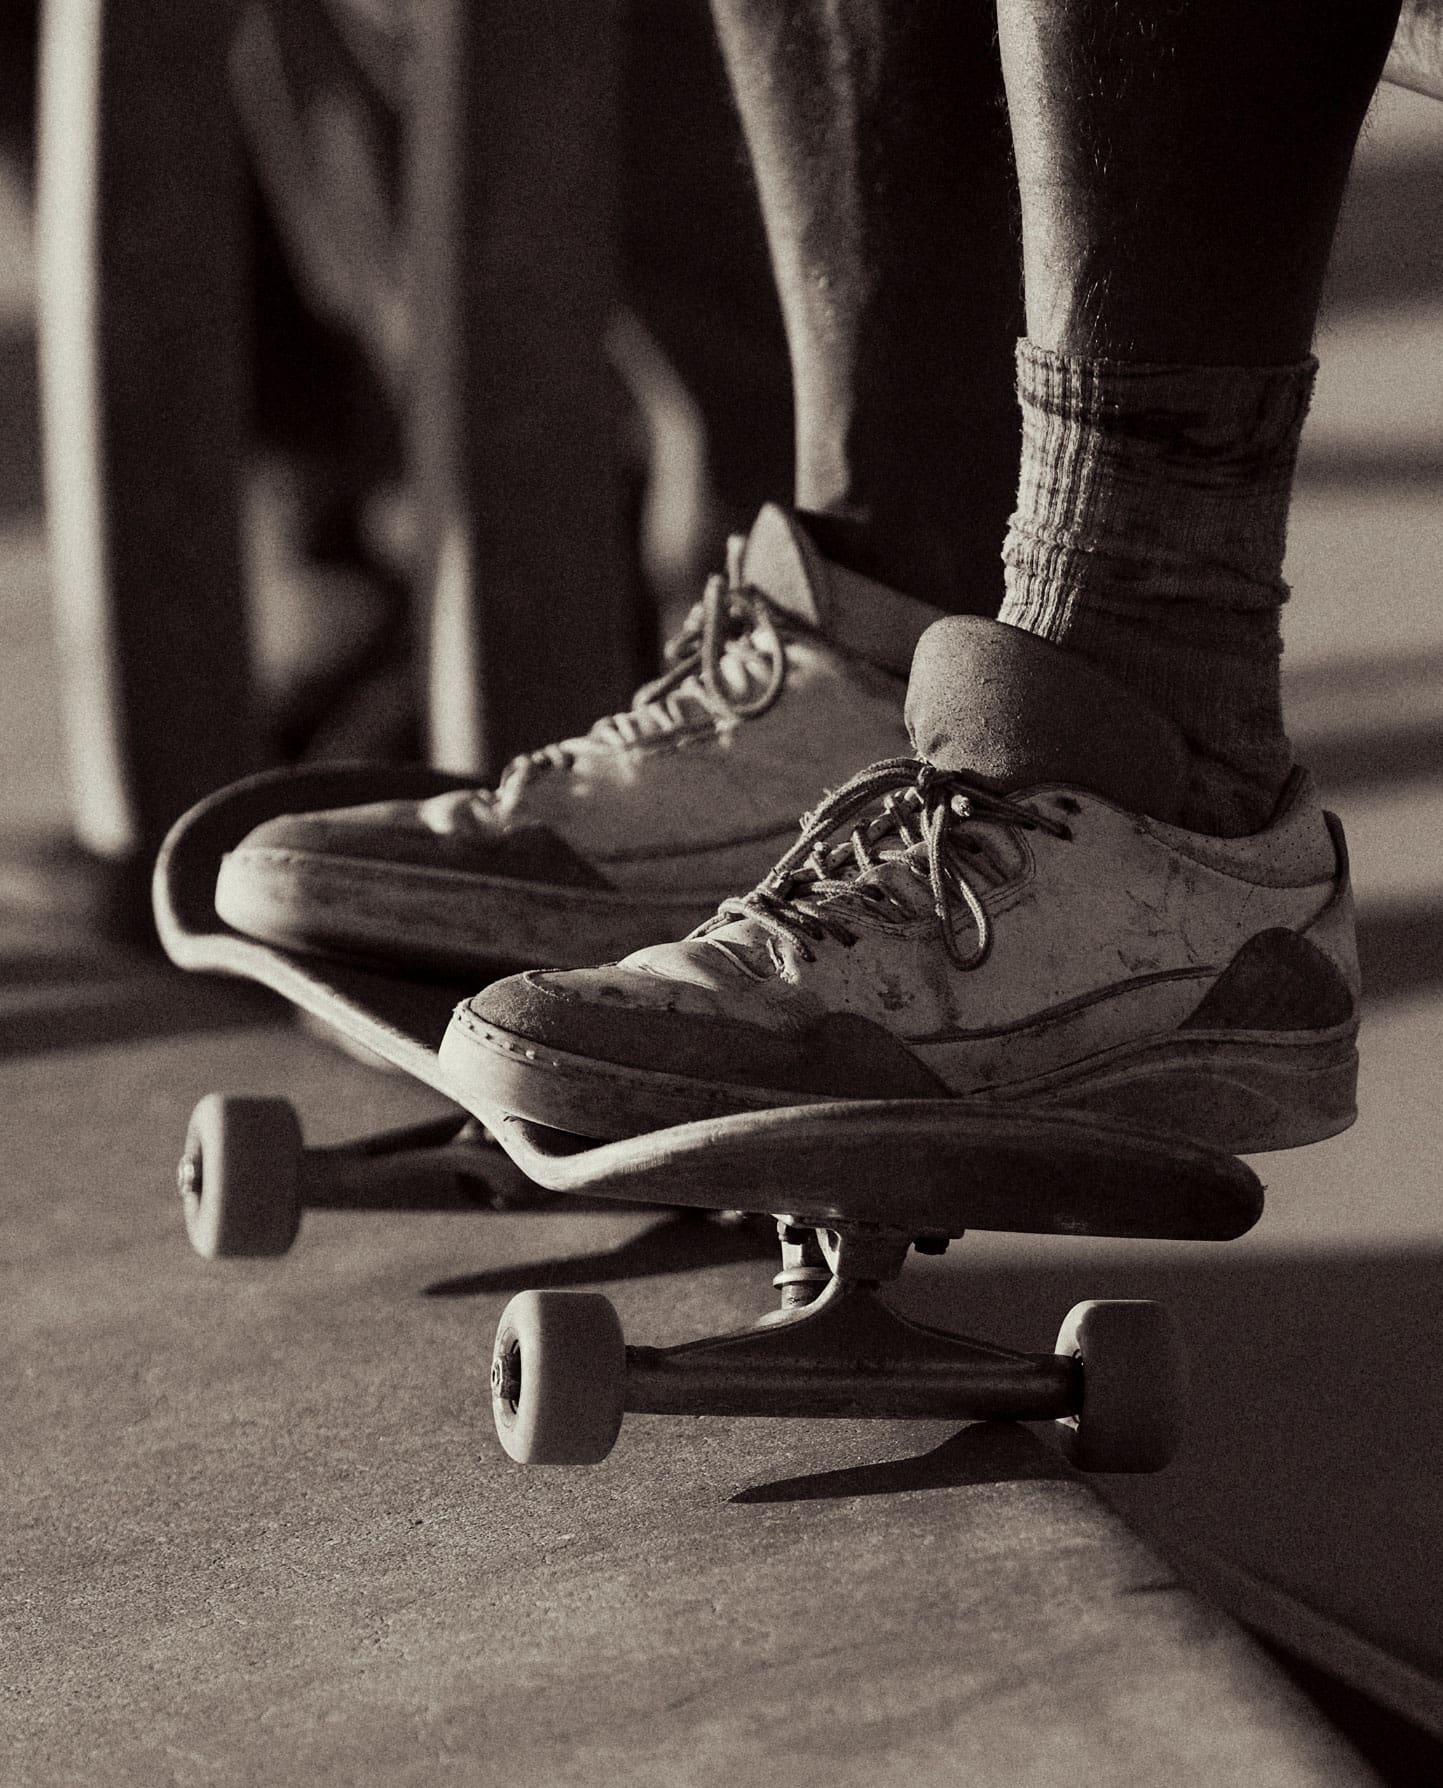 Focal Point, Erik Melvin | A detail of a skater's feet on a skateboard. Photo by Erik Melvin